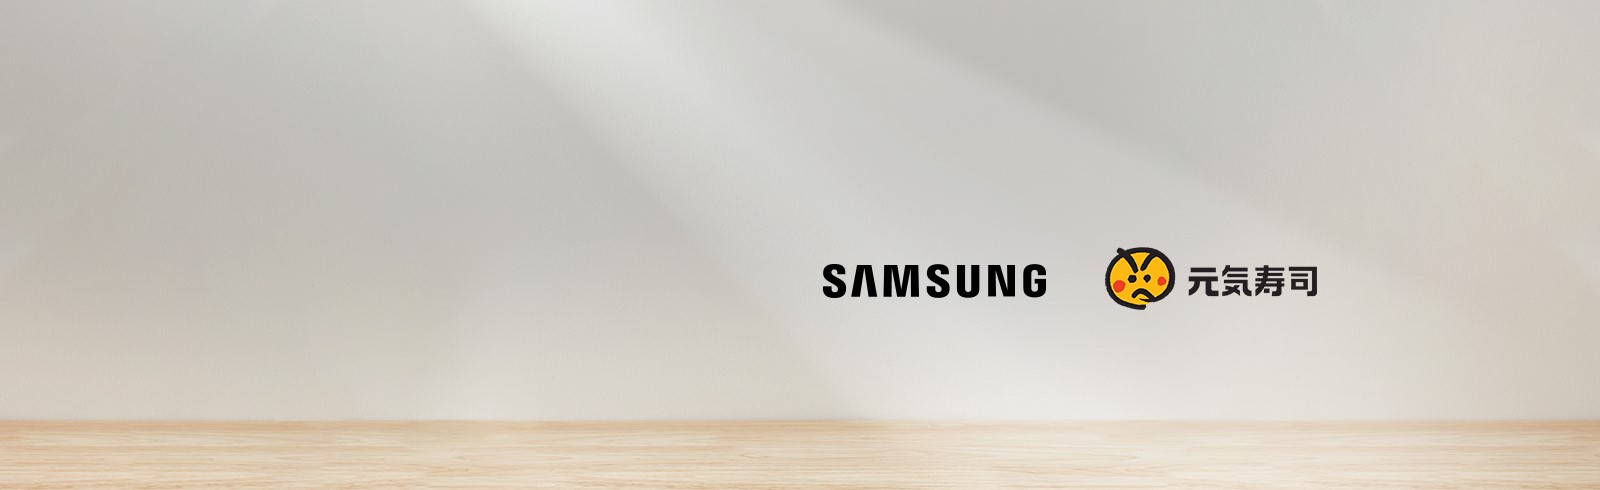 Samsung 及元氣壽司的商標